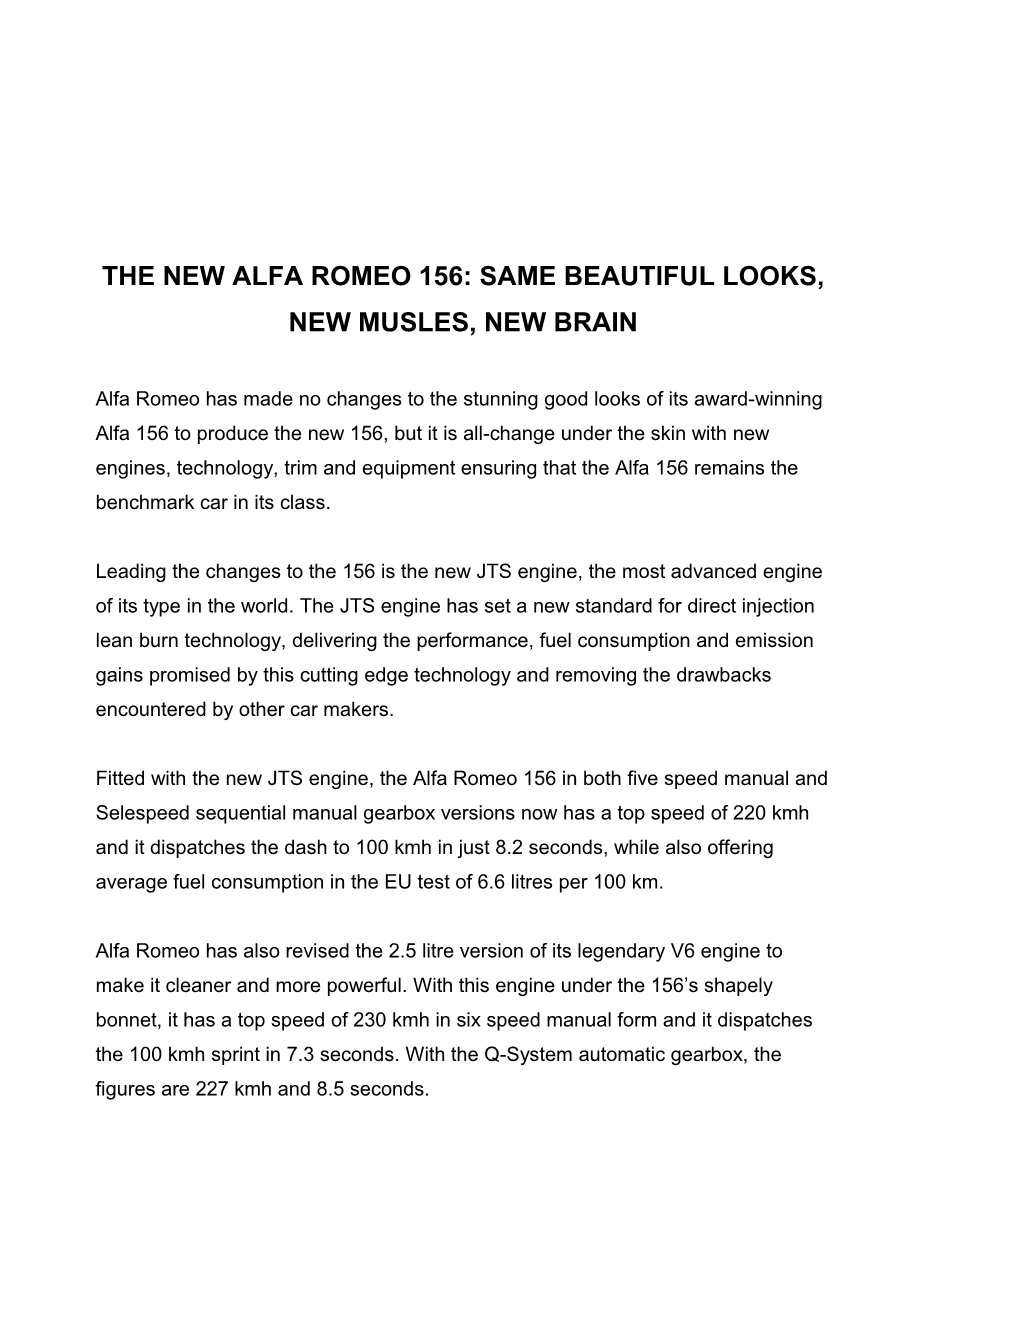 The New Alfa Romeo 156: Same Beautiful Looks, New Musles, New Brain